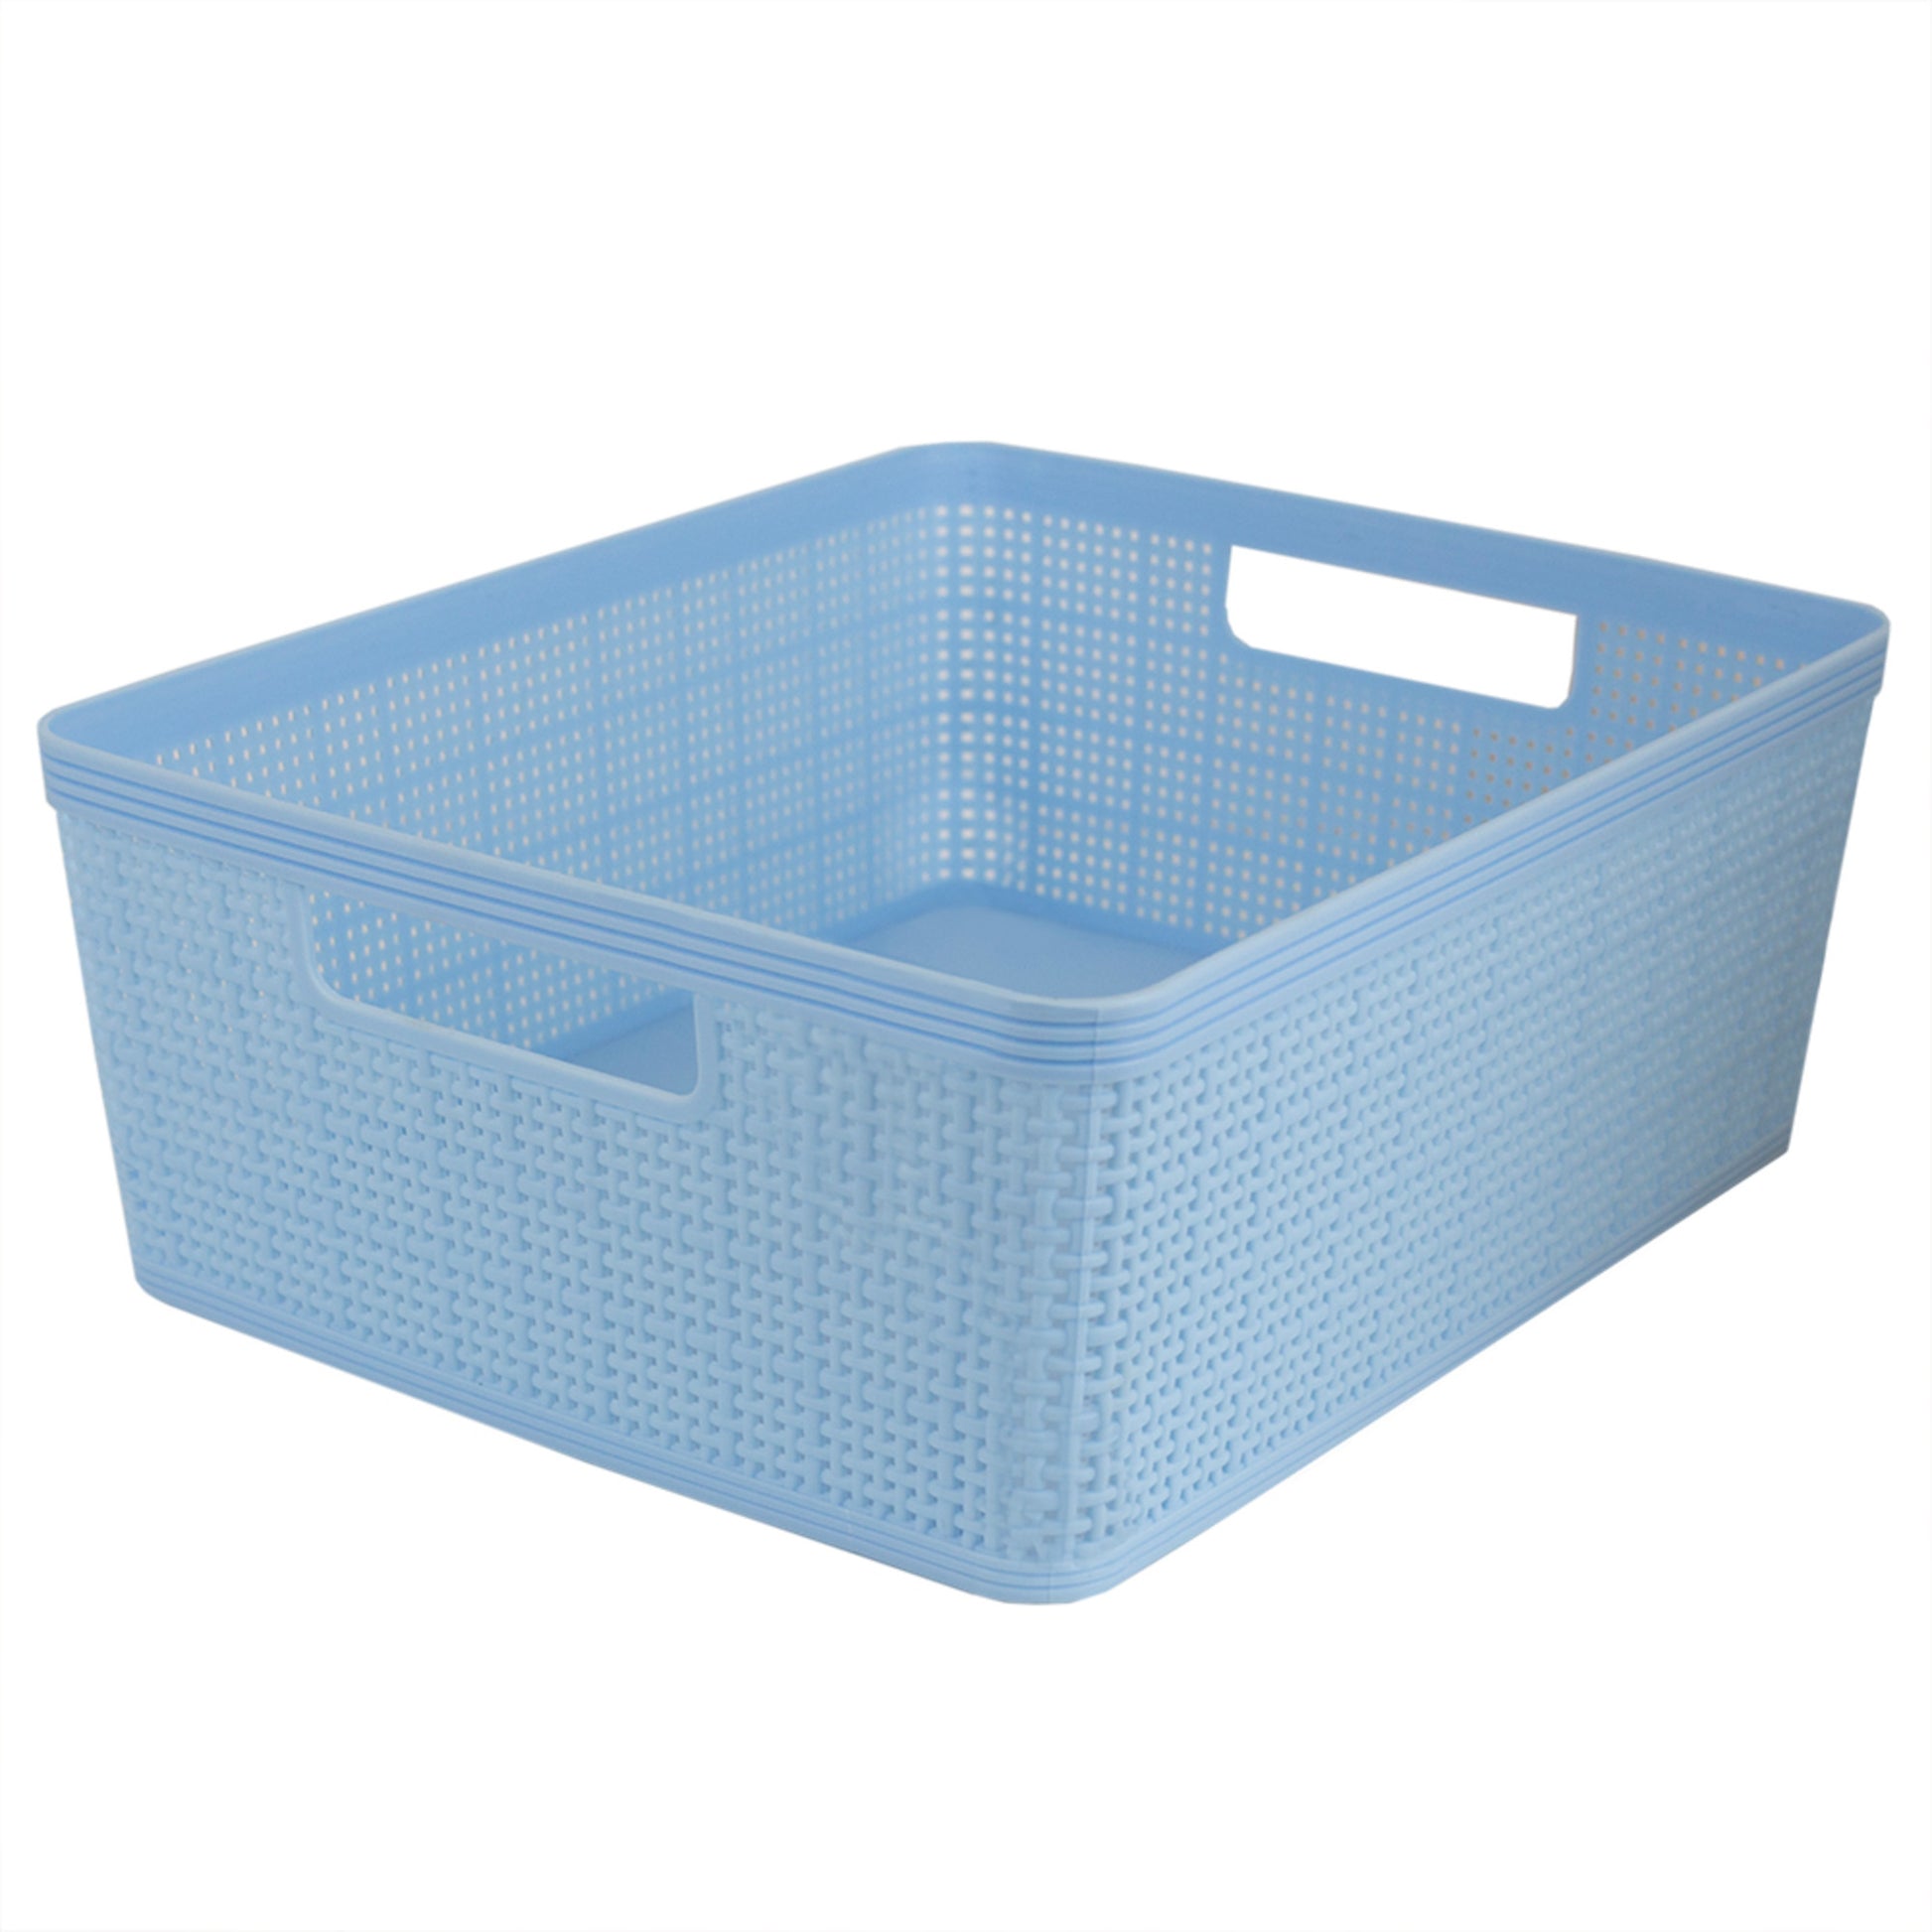 Home Basics Trellis Large Plastic Storage Basket with Cut-Out Handles, Blue - Blue